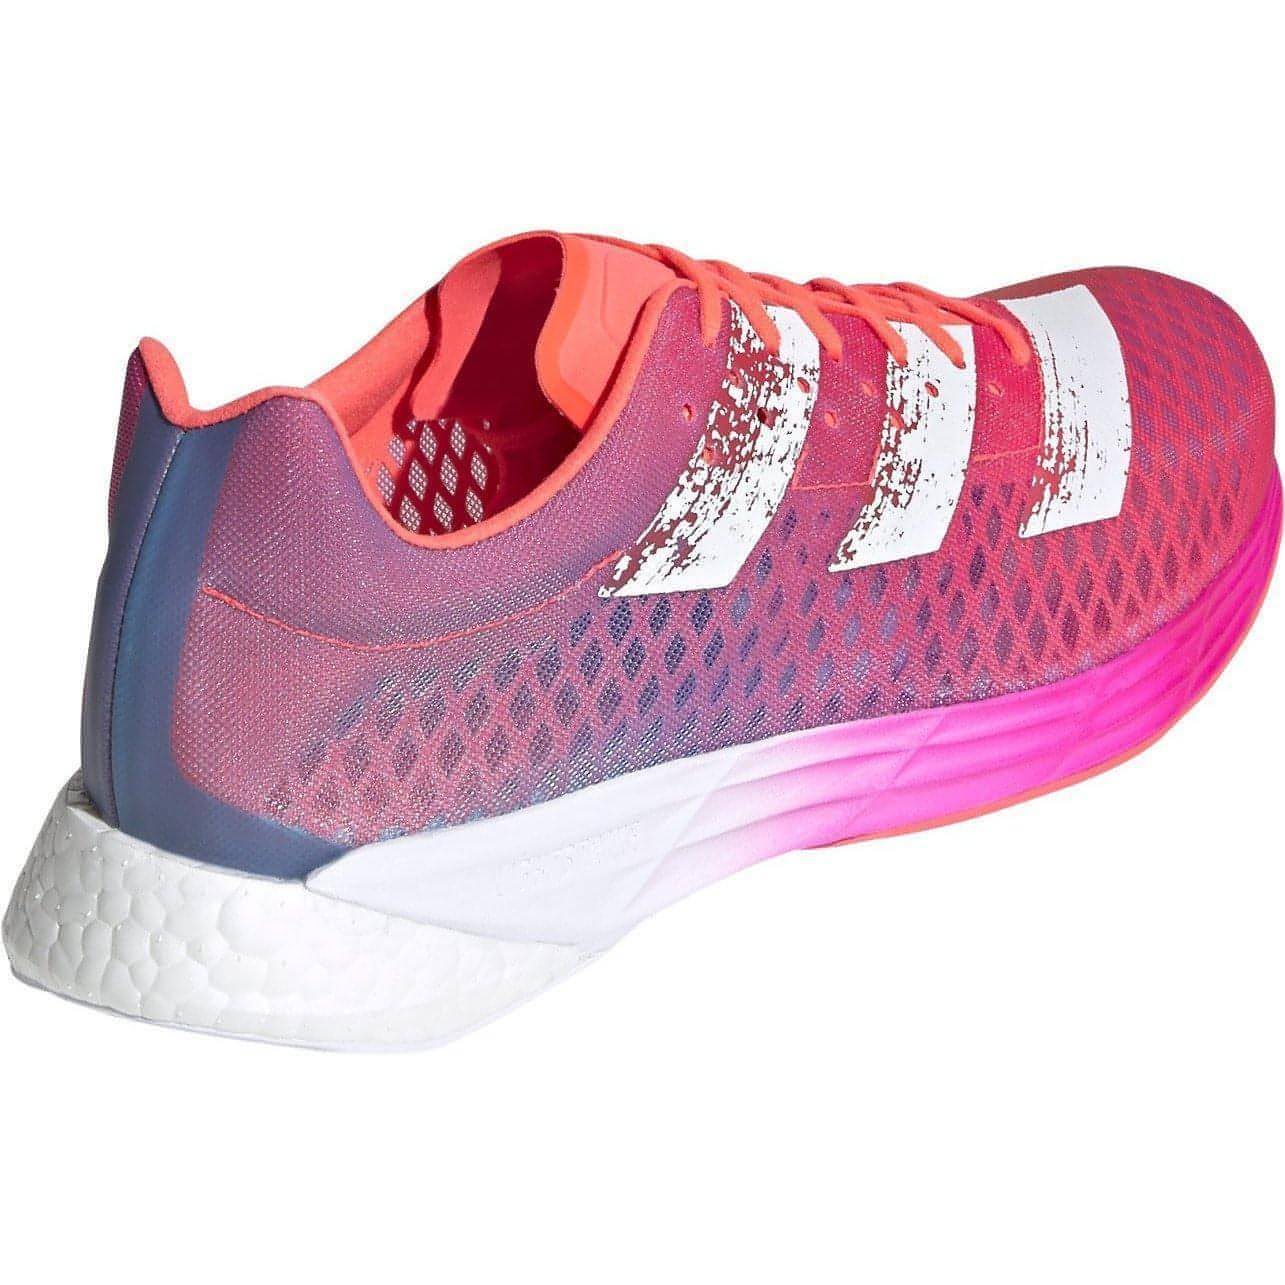 adidas Adizero Pro Mens Running Shoes - Pink - Start Fitness